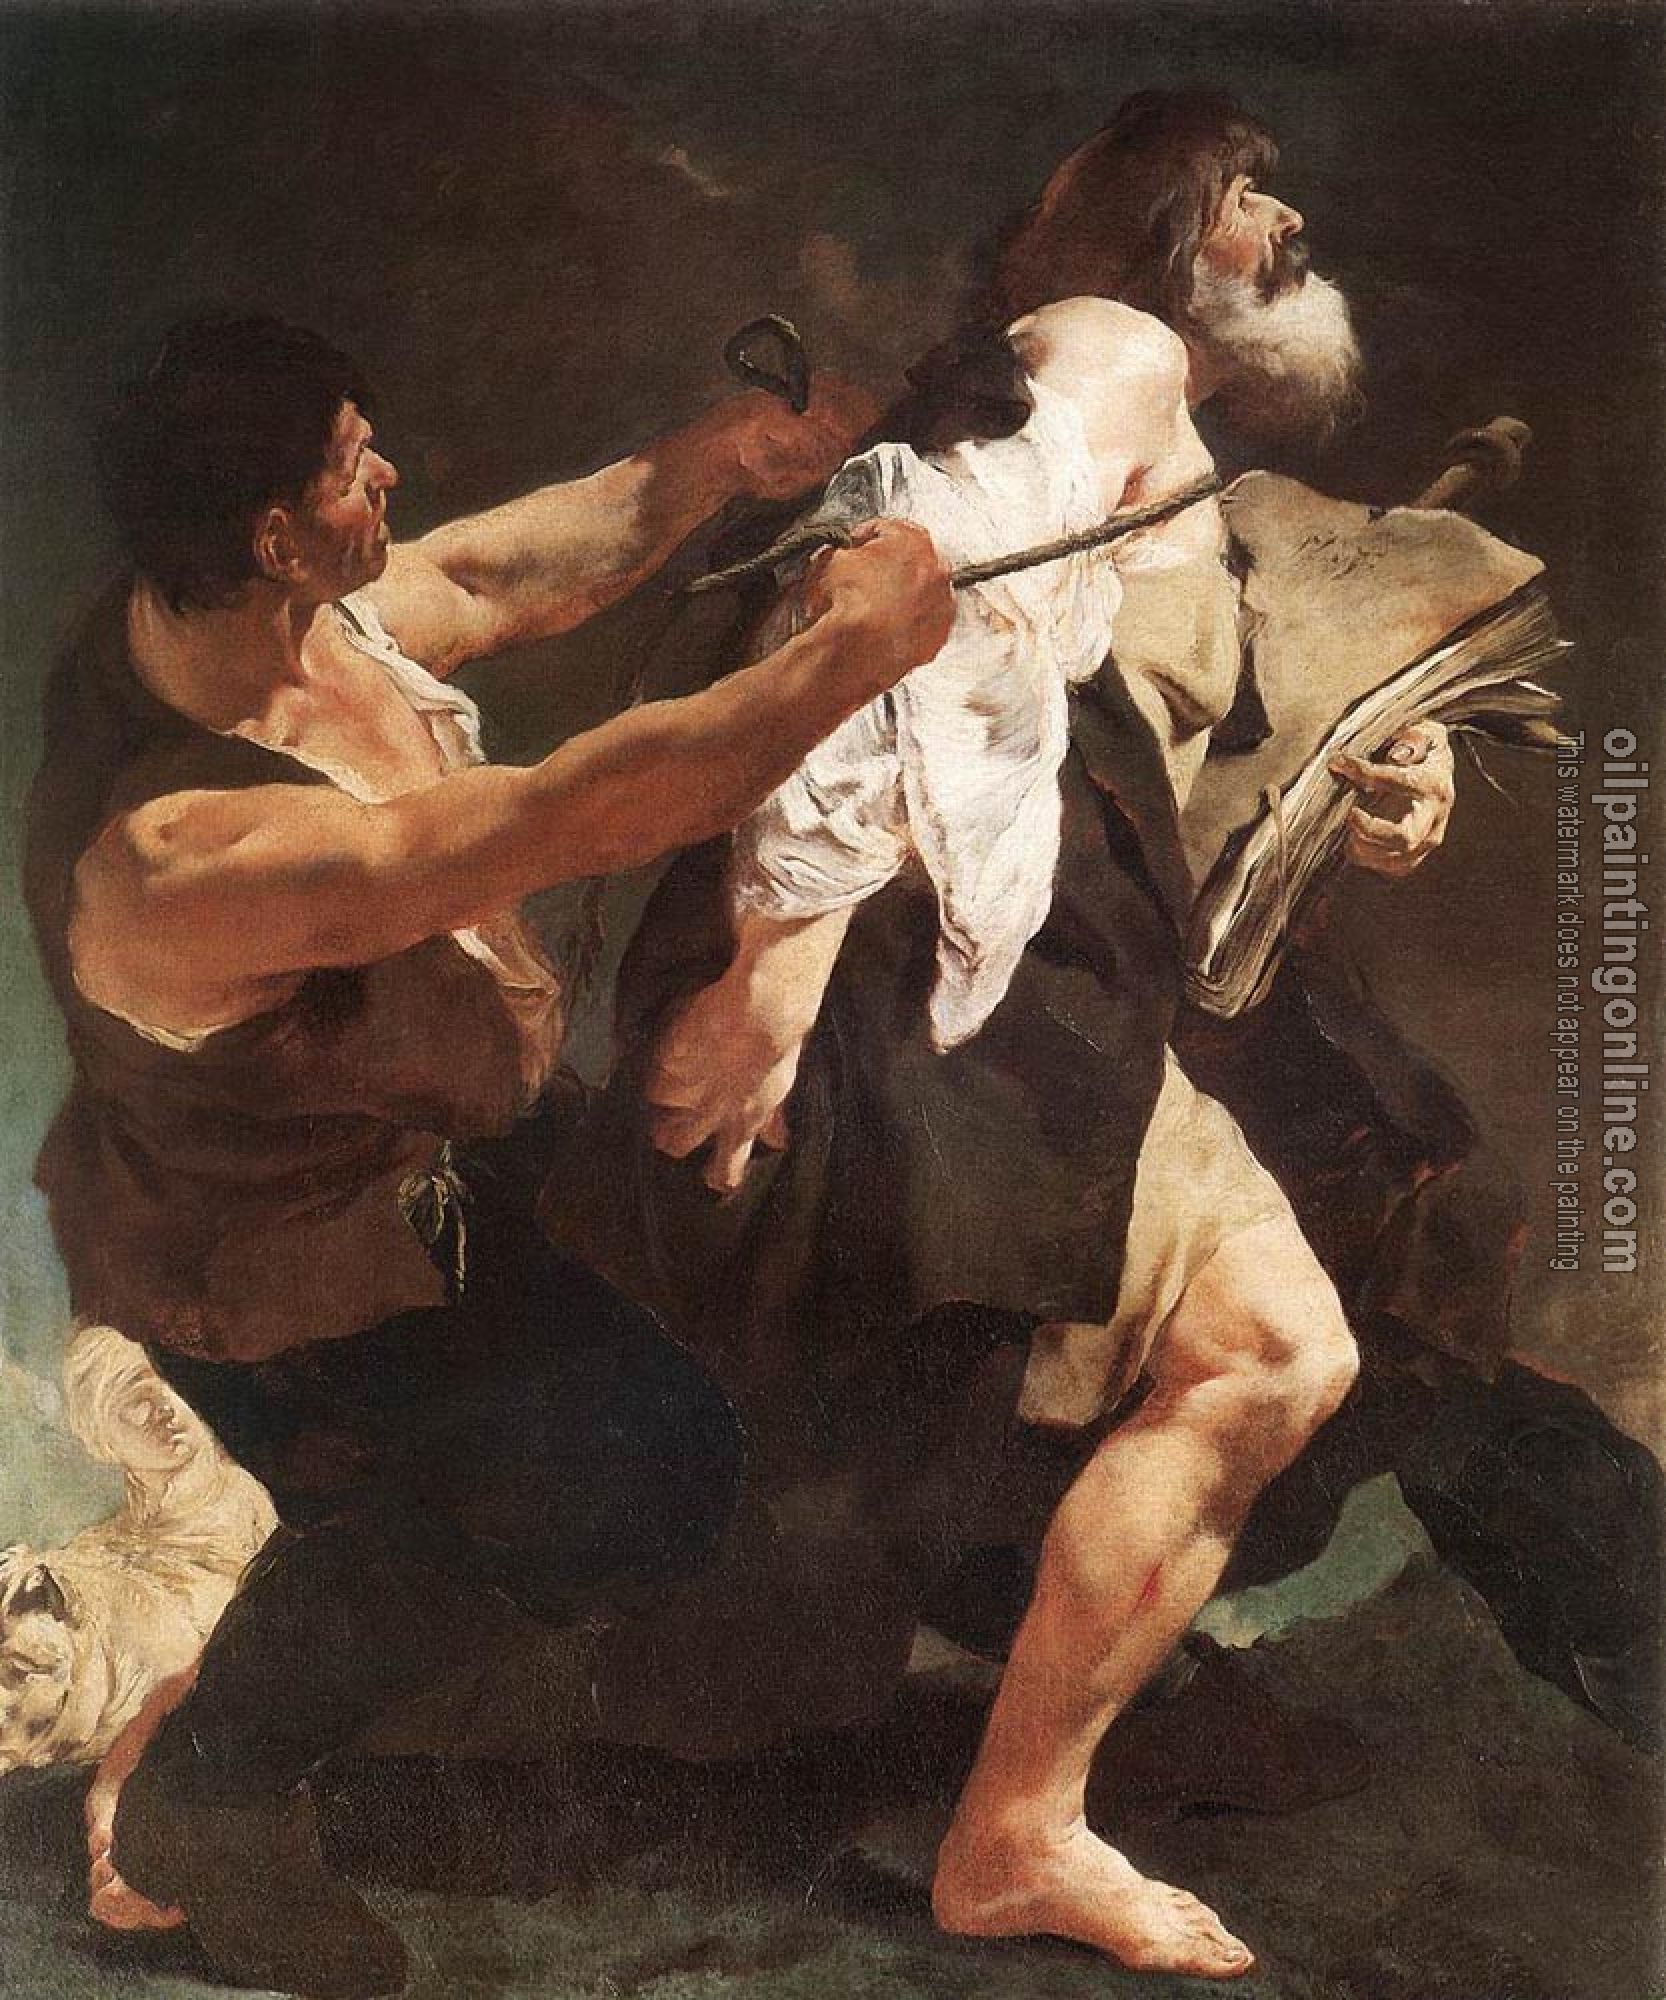 Piazzetta, Giovanni Battista - St. James Led to Martyrdom